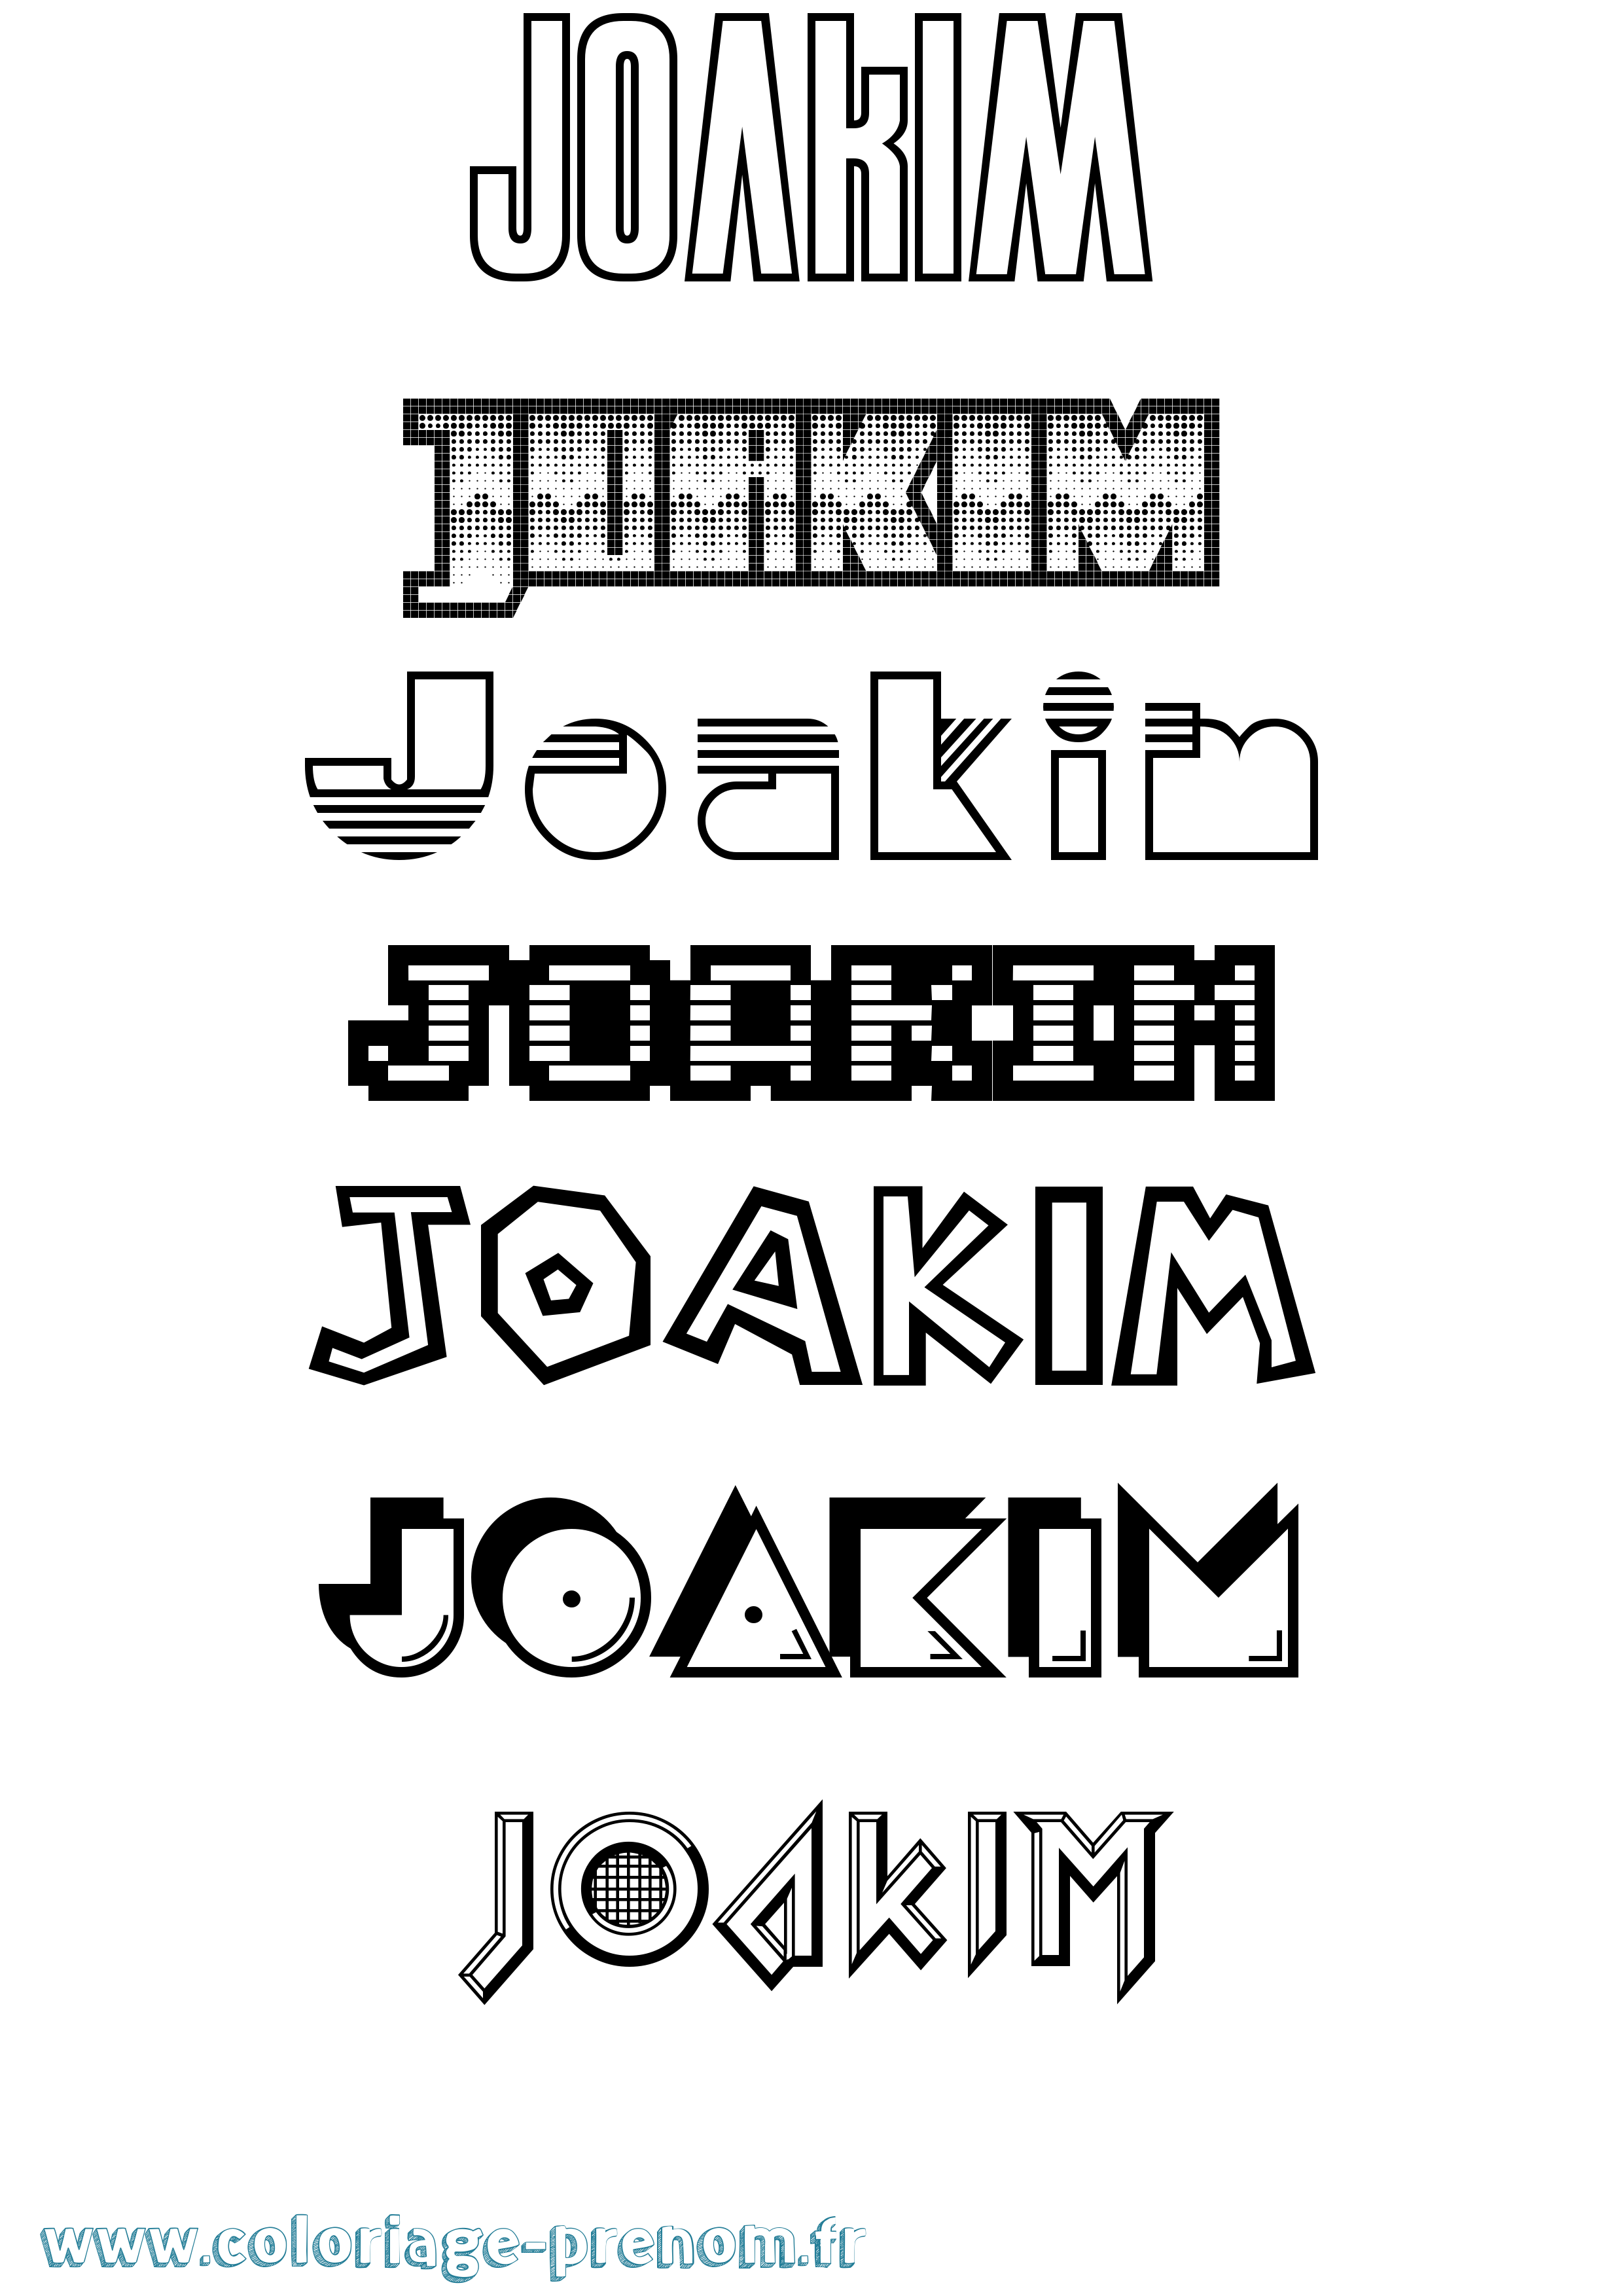 Coloriage prénom Joakim